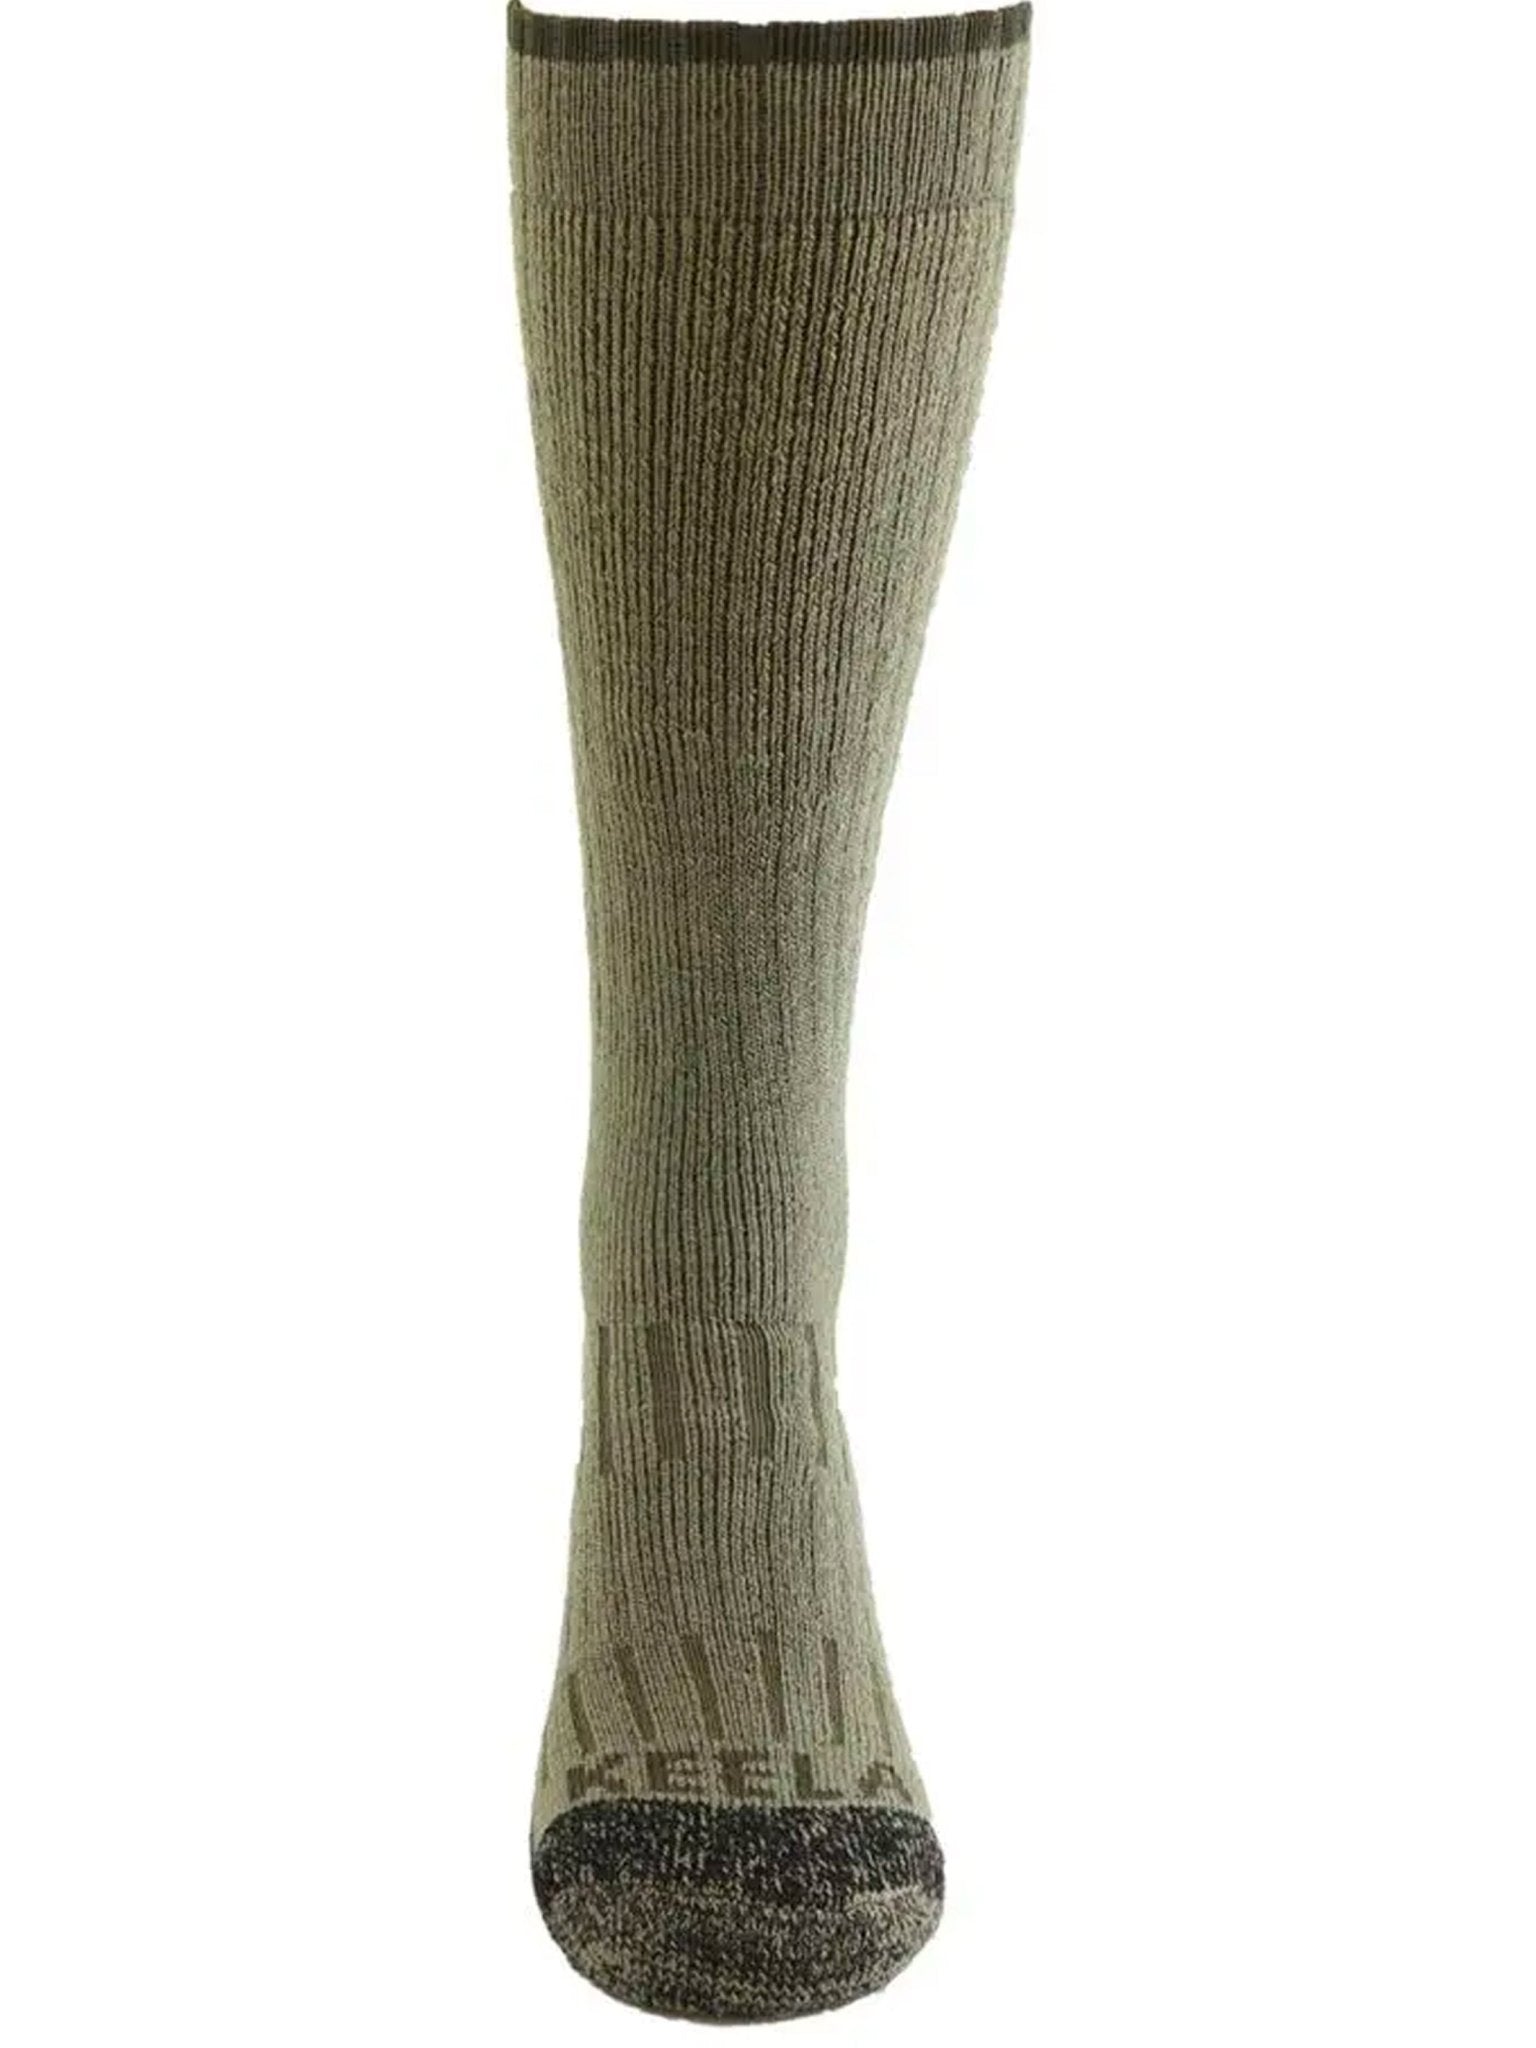 Keela Keela Outdoors - Glacier Socks - Cushioned, Cordura reinforced, comfort fit merino wool mens socks Socks